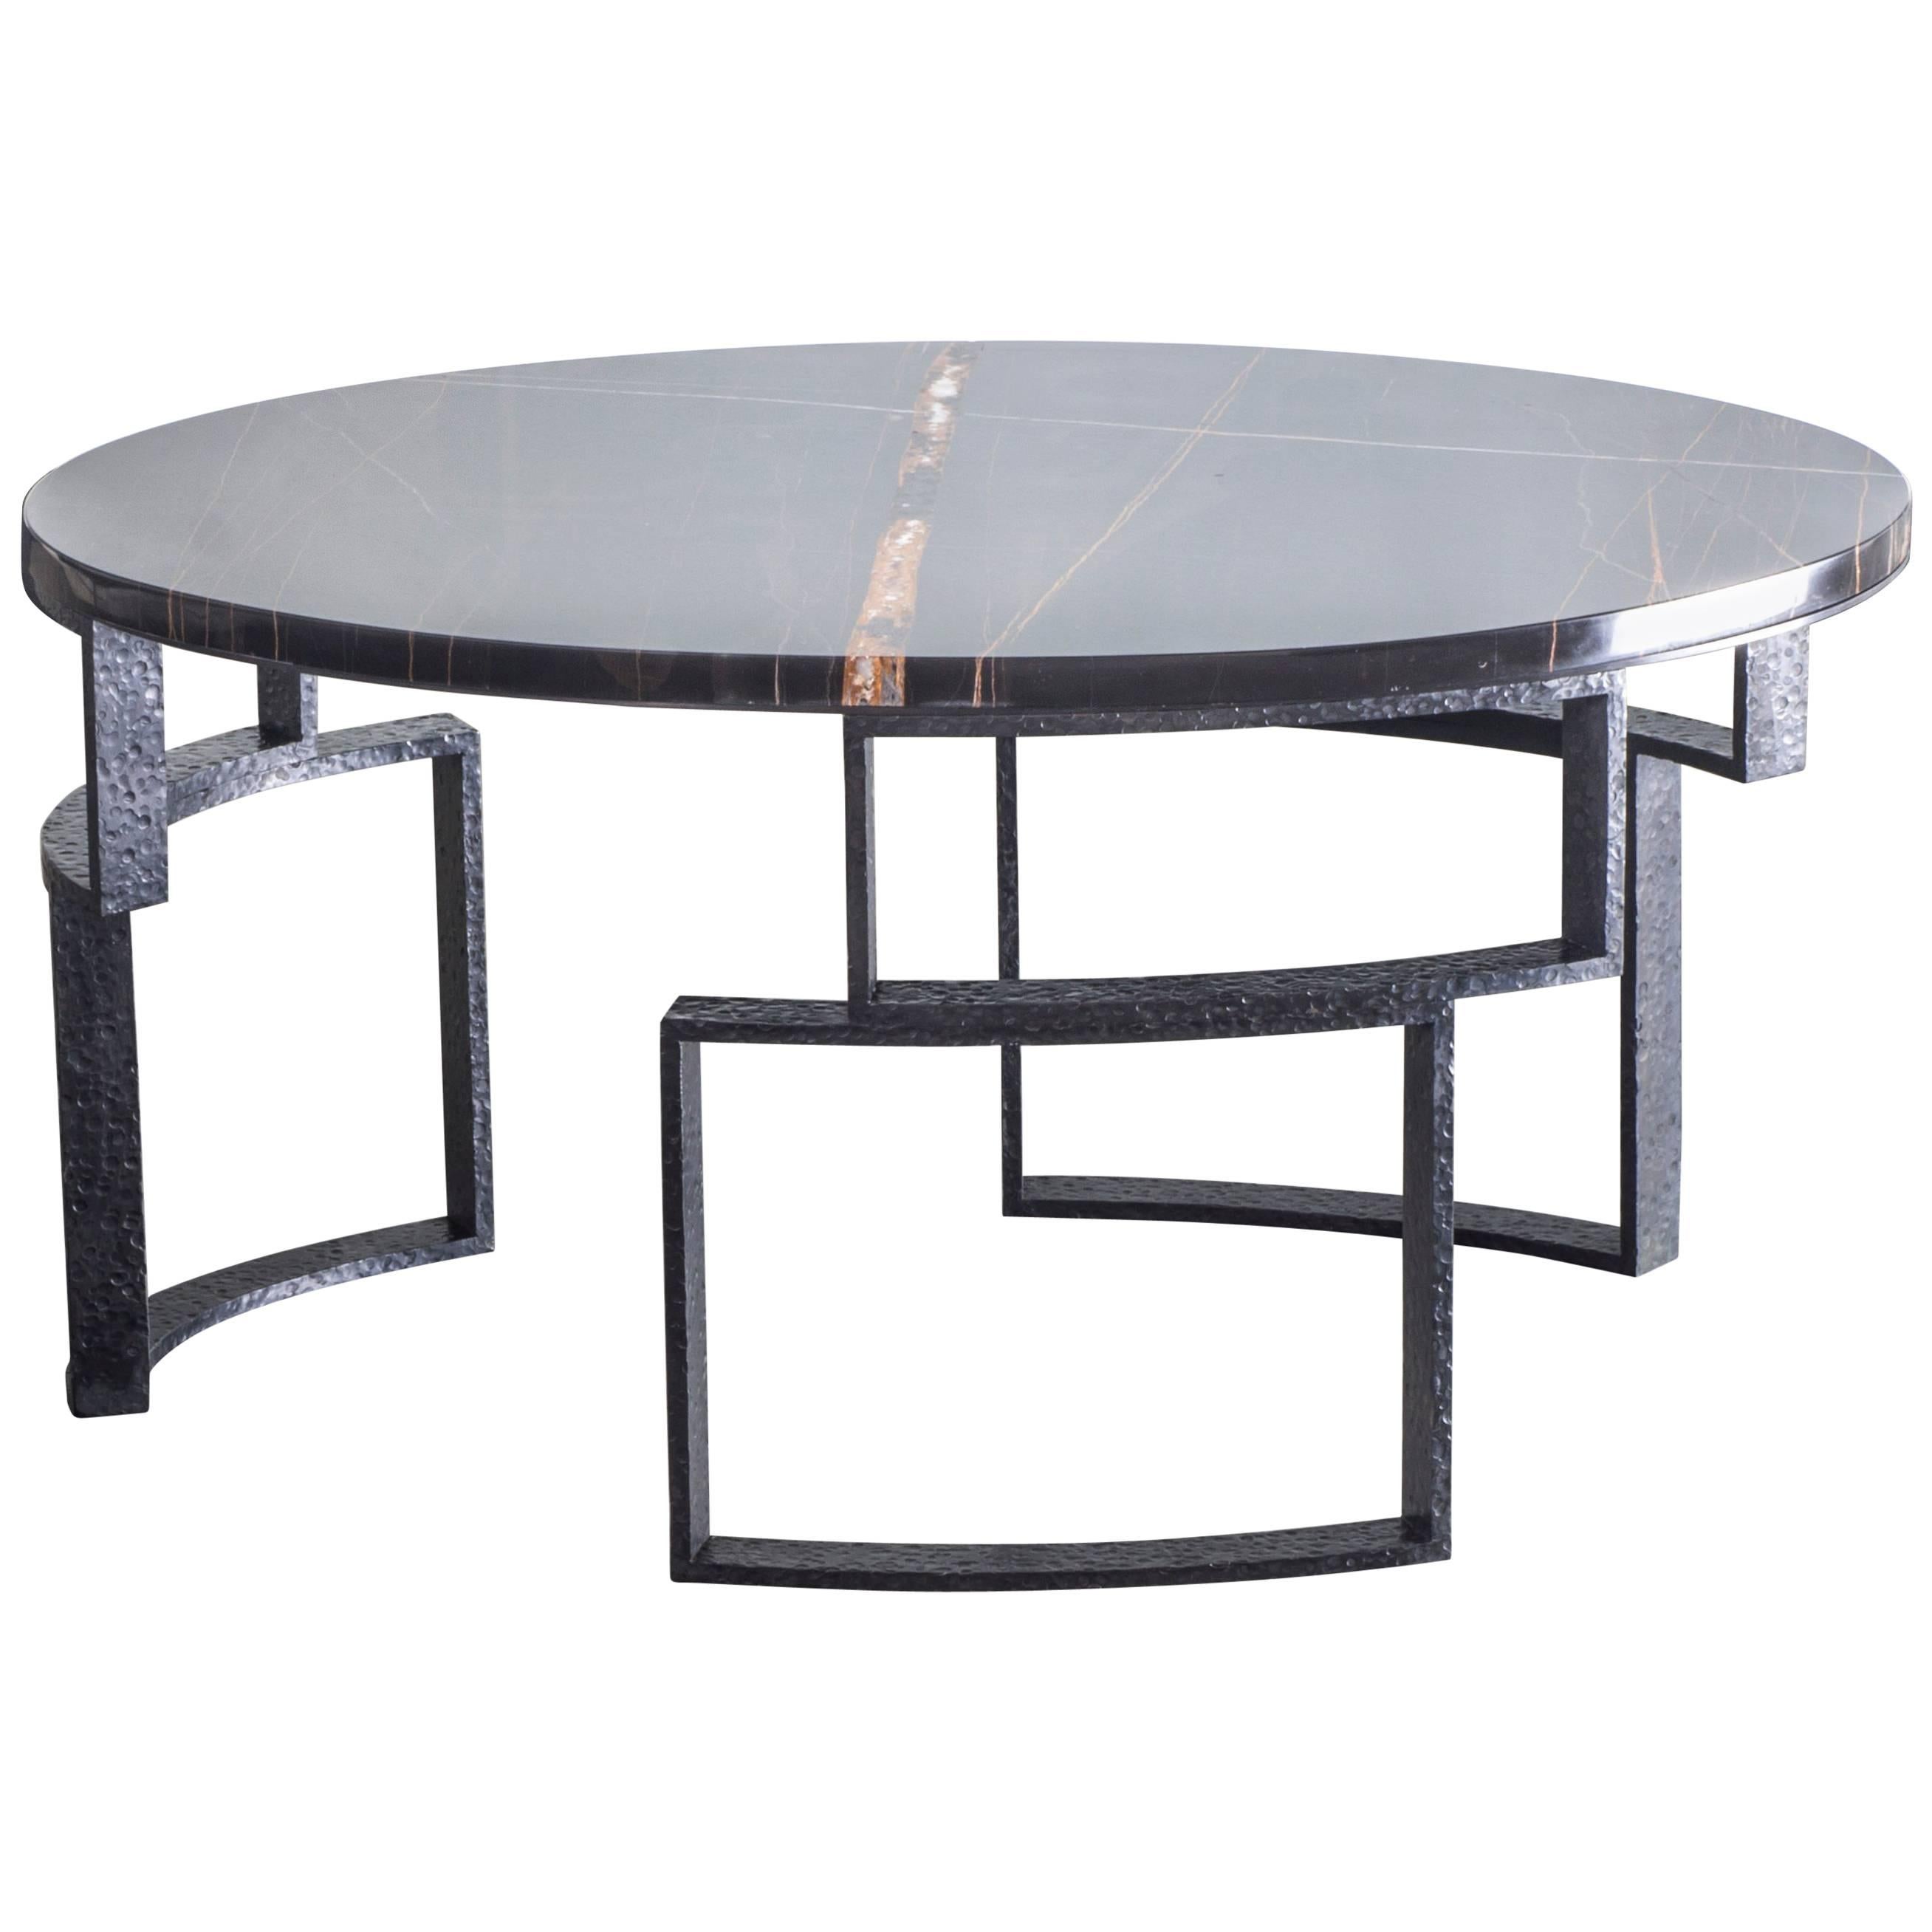 Hammered Windows Ellipse Table with Noir Doré Top and Burnished Hammered Steel For Sale